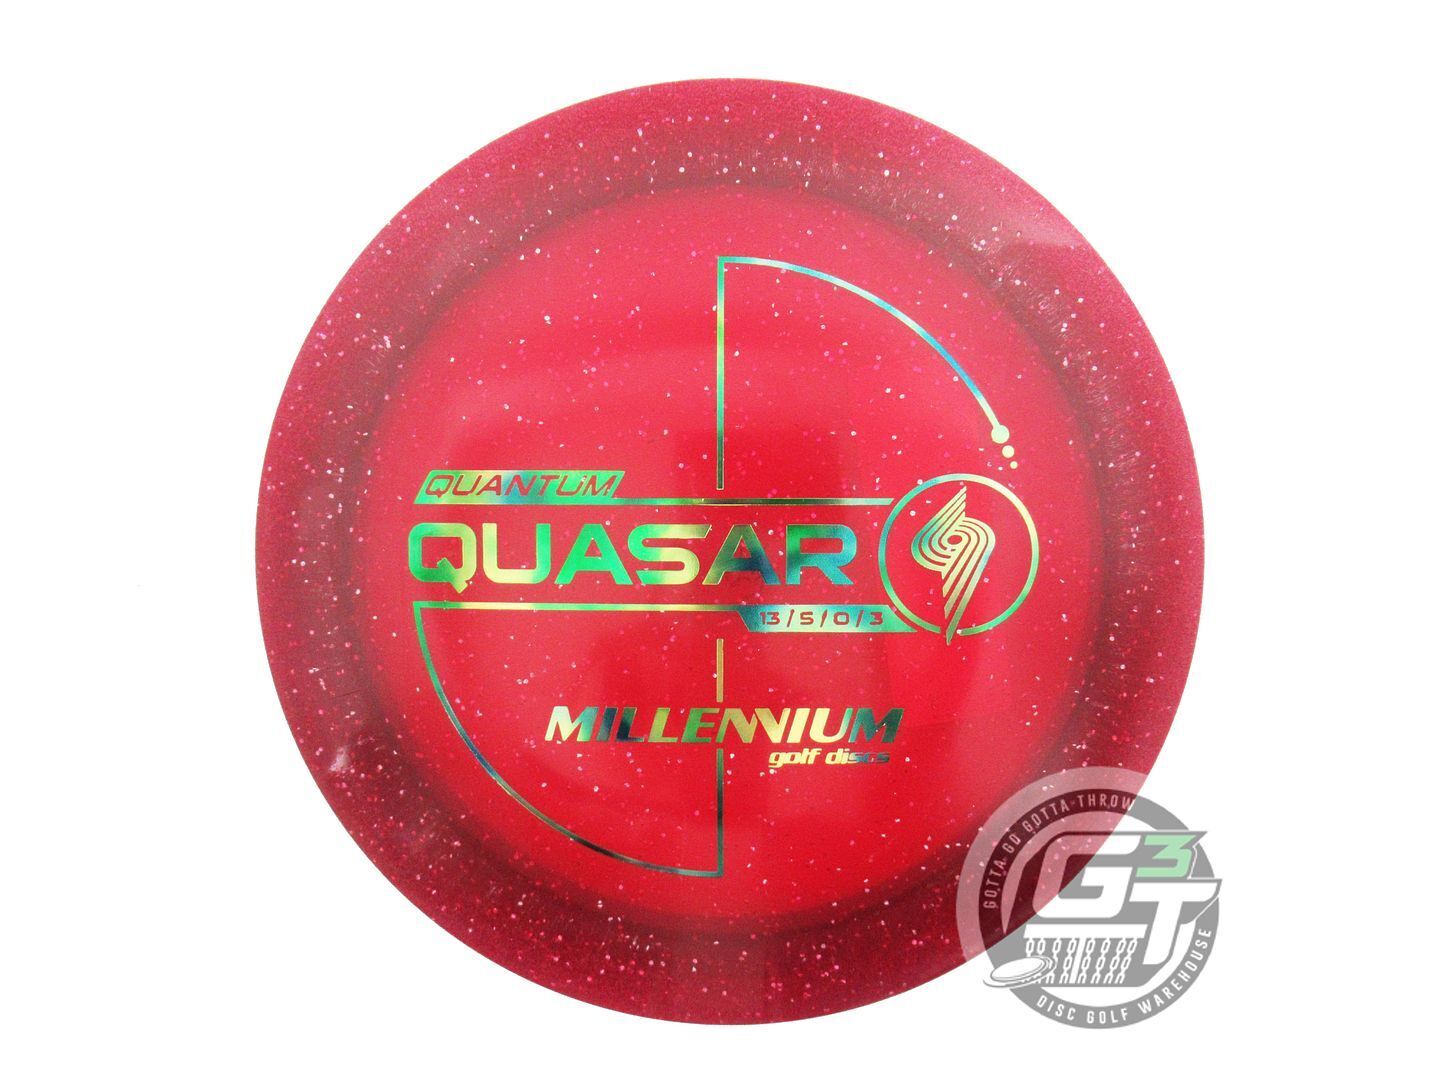 Millennium Quantum Quasar Distance Driver Golf Disc (Individually Listed)